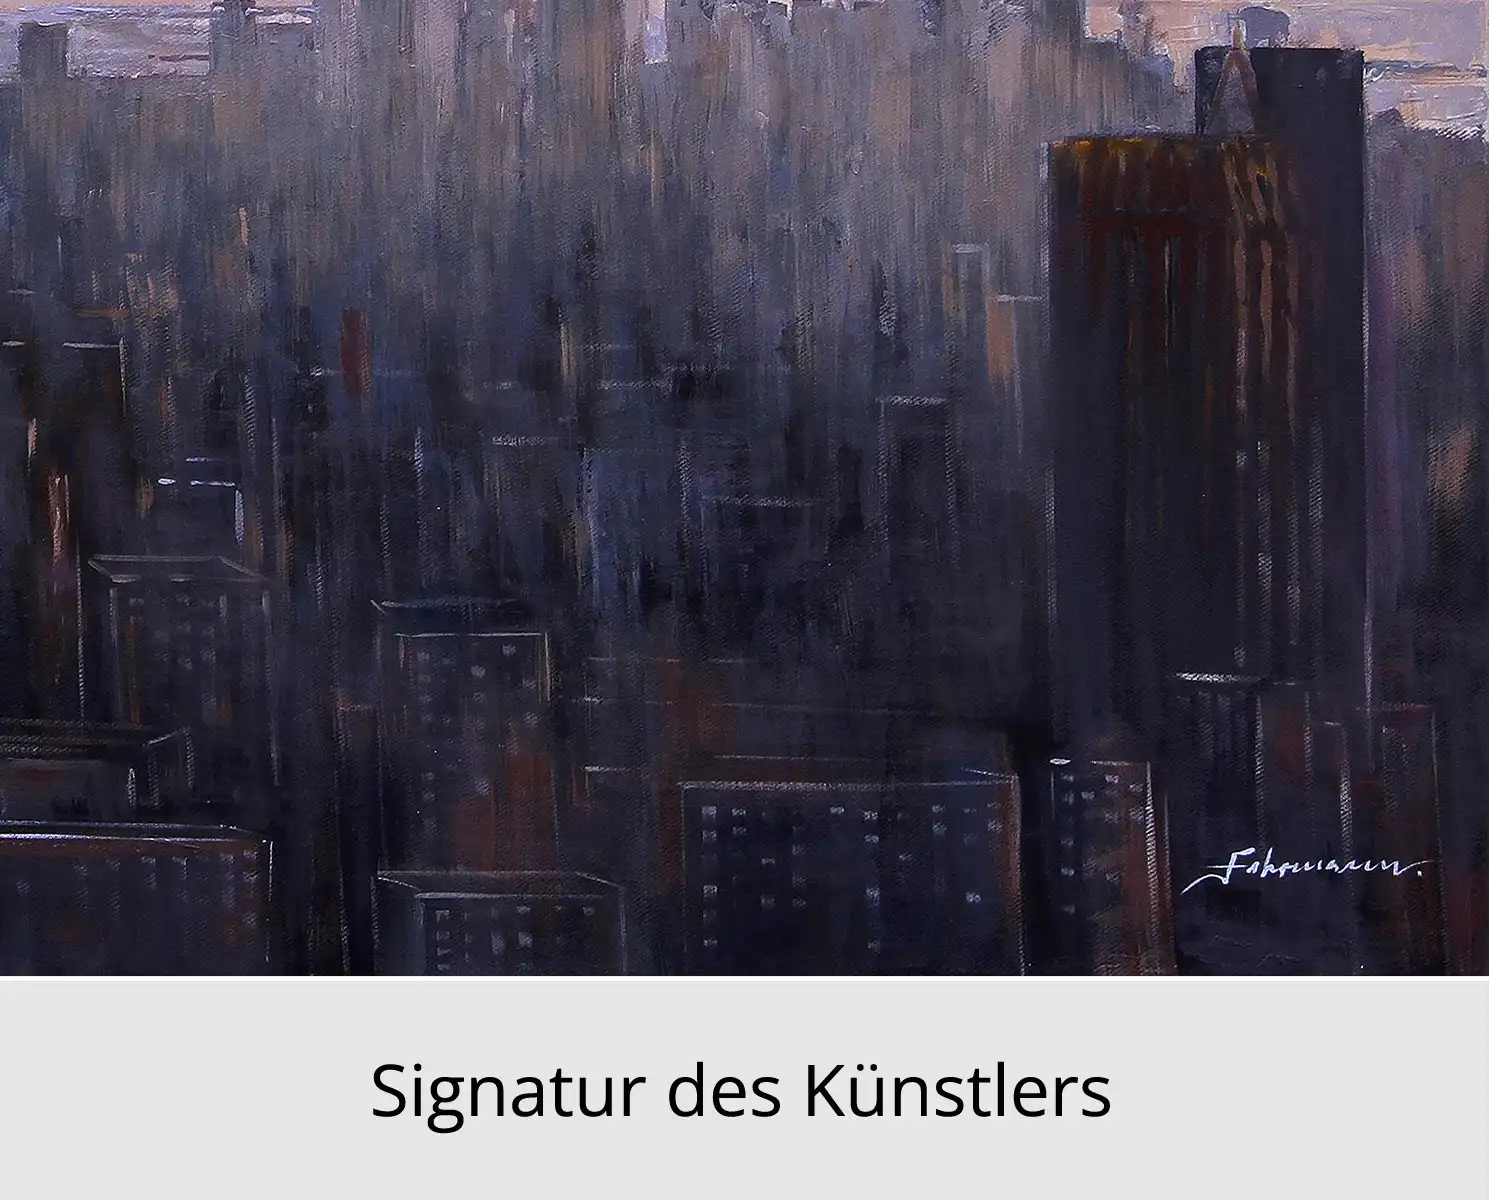 Kunstdruck, U. Fehrmann: "New York (Chrysler Building)", signierte Edition, Nr. 1/100